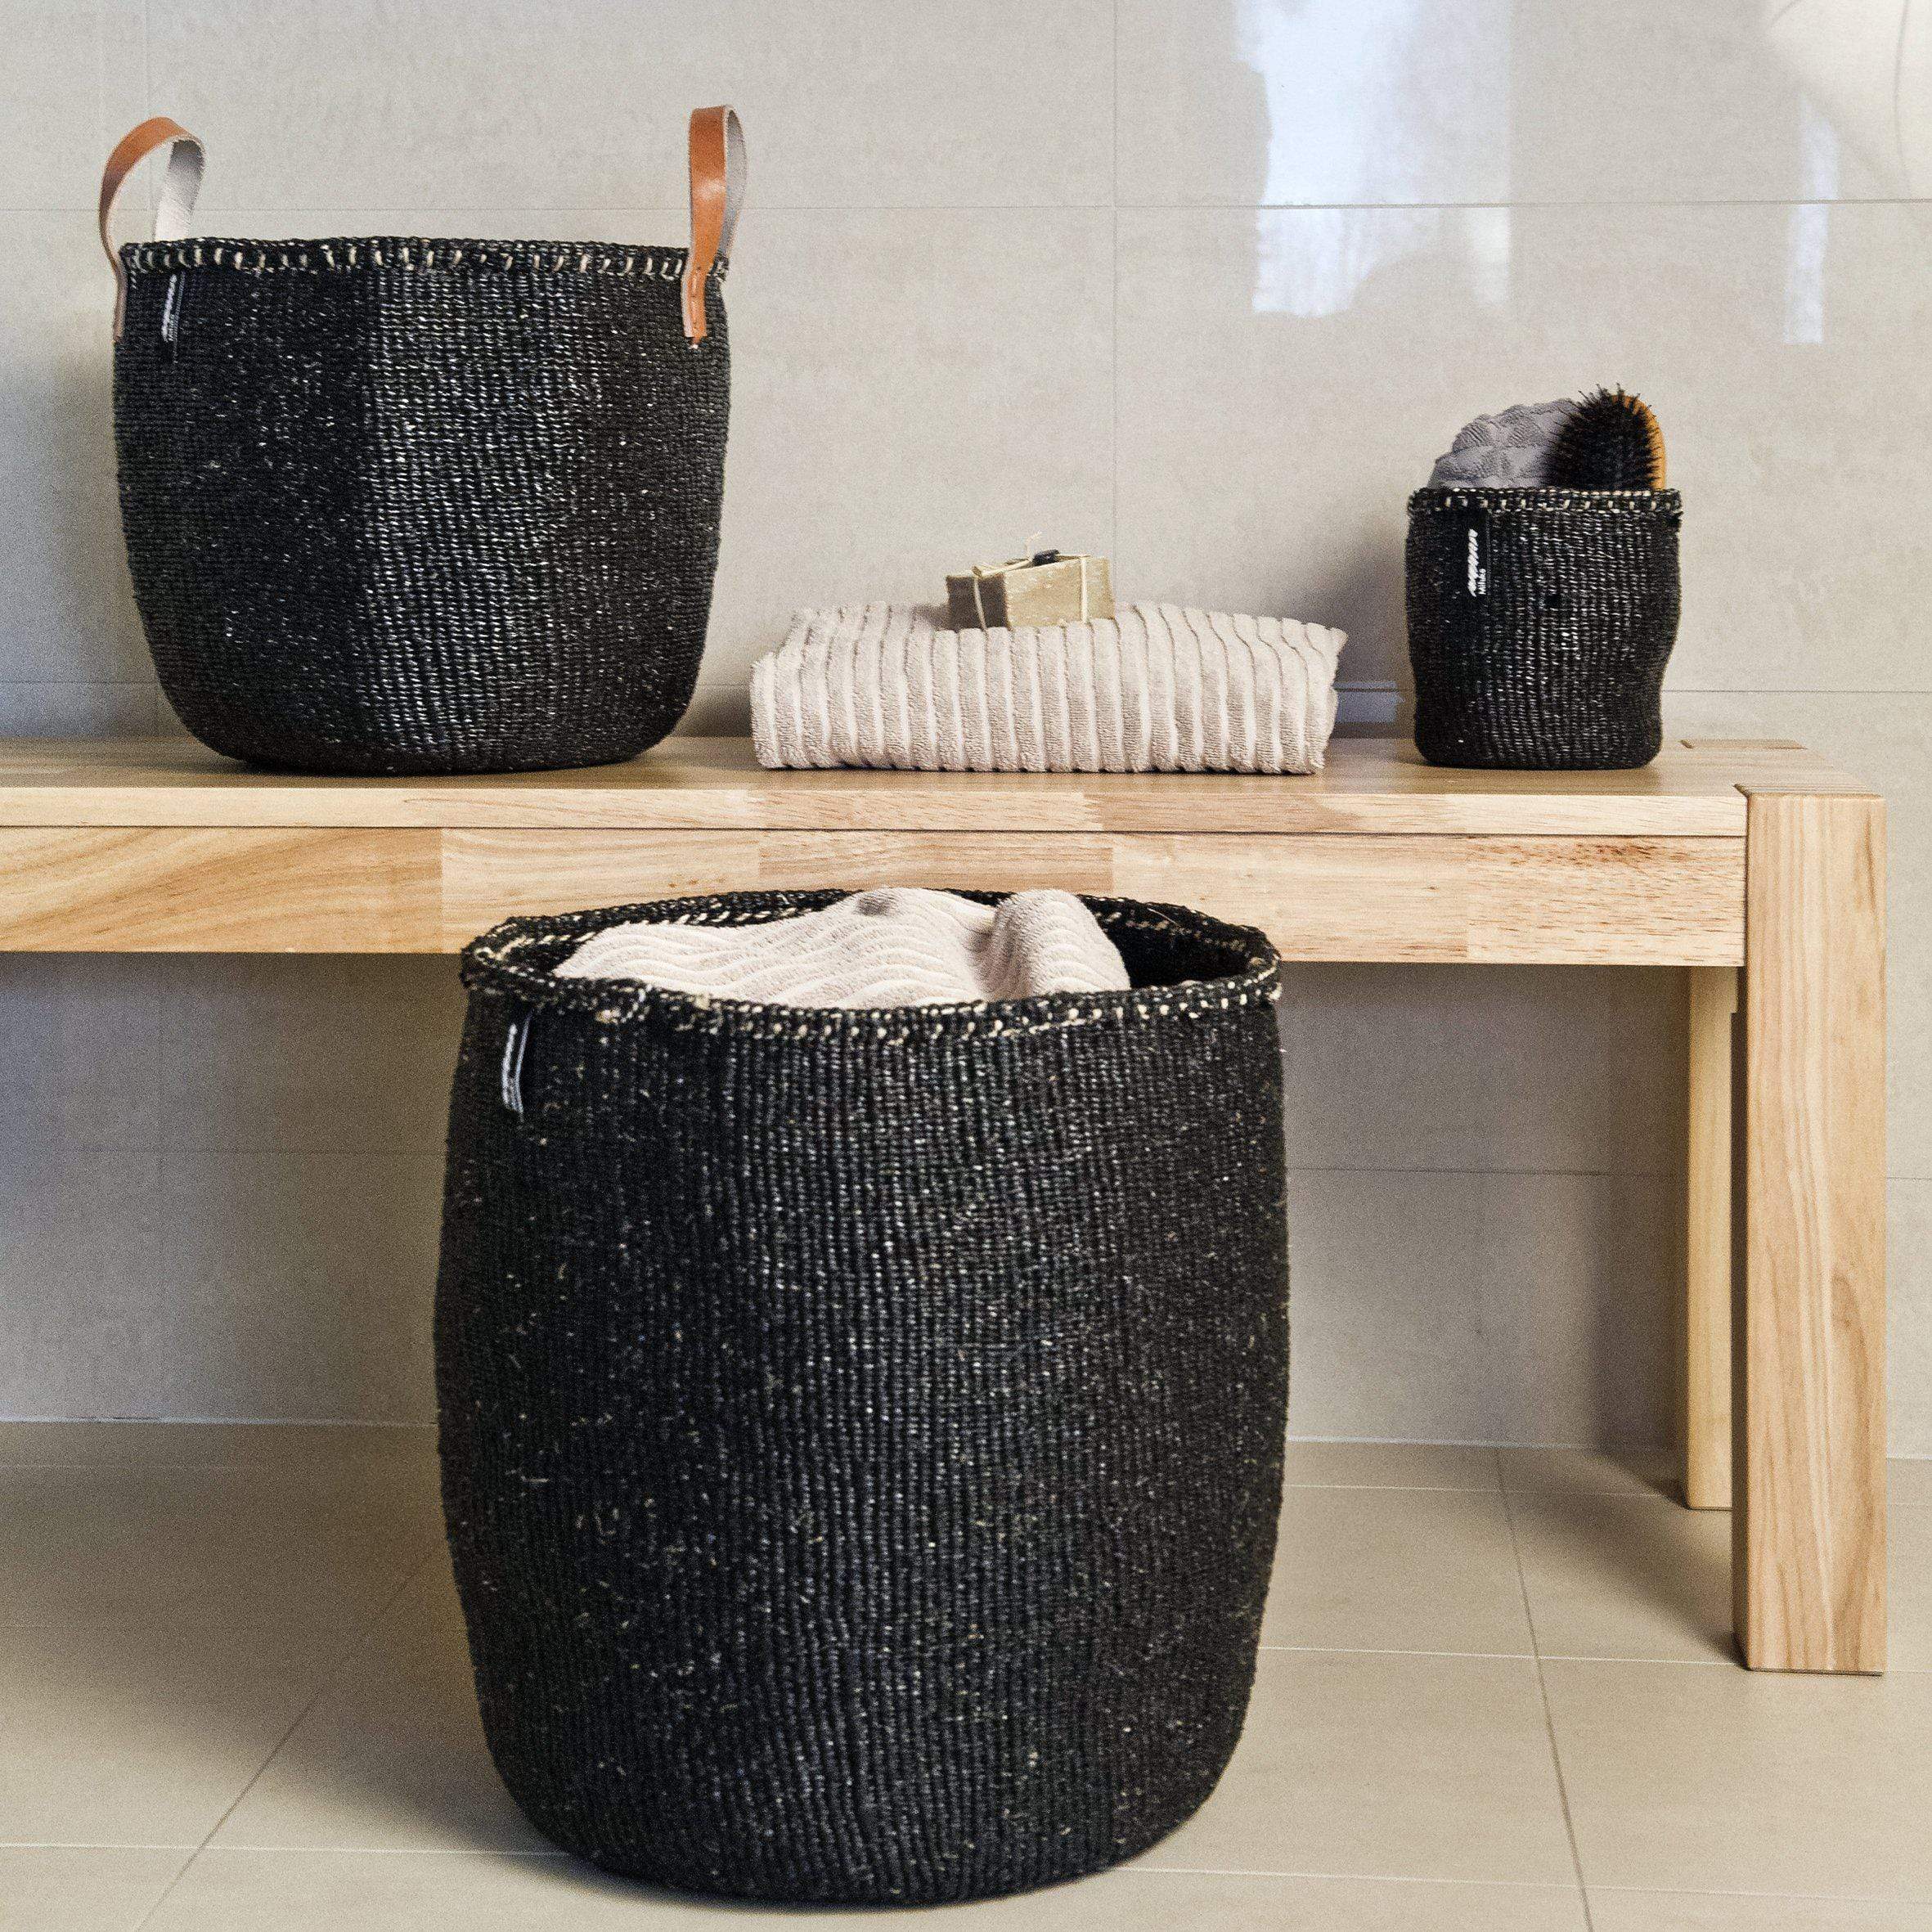 Mifuko Partly recycled plastic and sisal Medium size basket L Kiondo basket | Black L